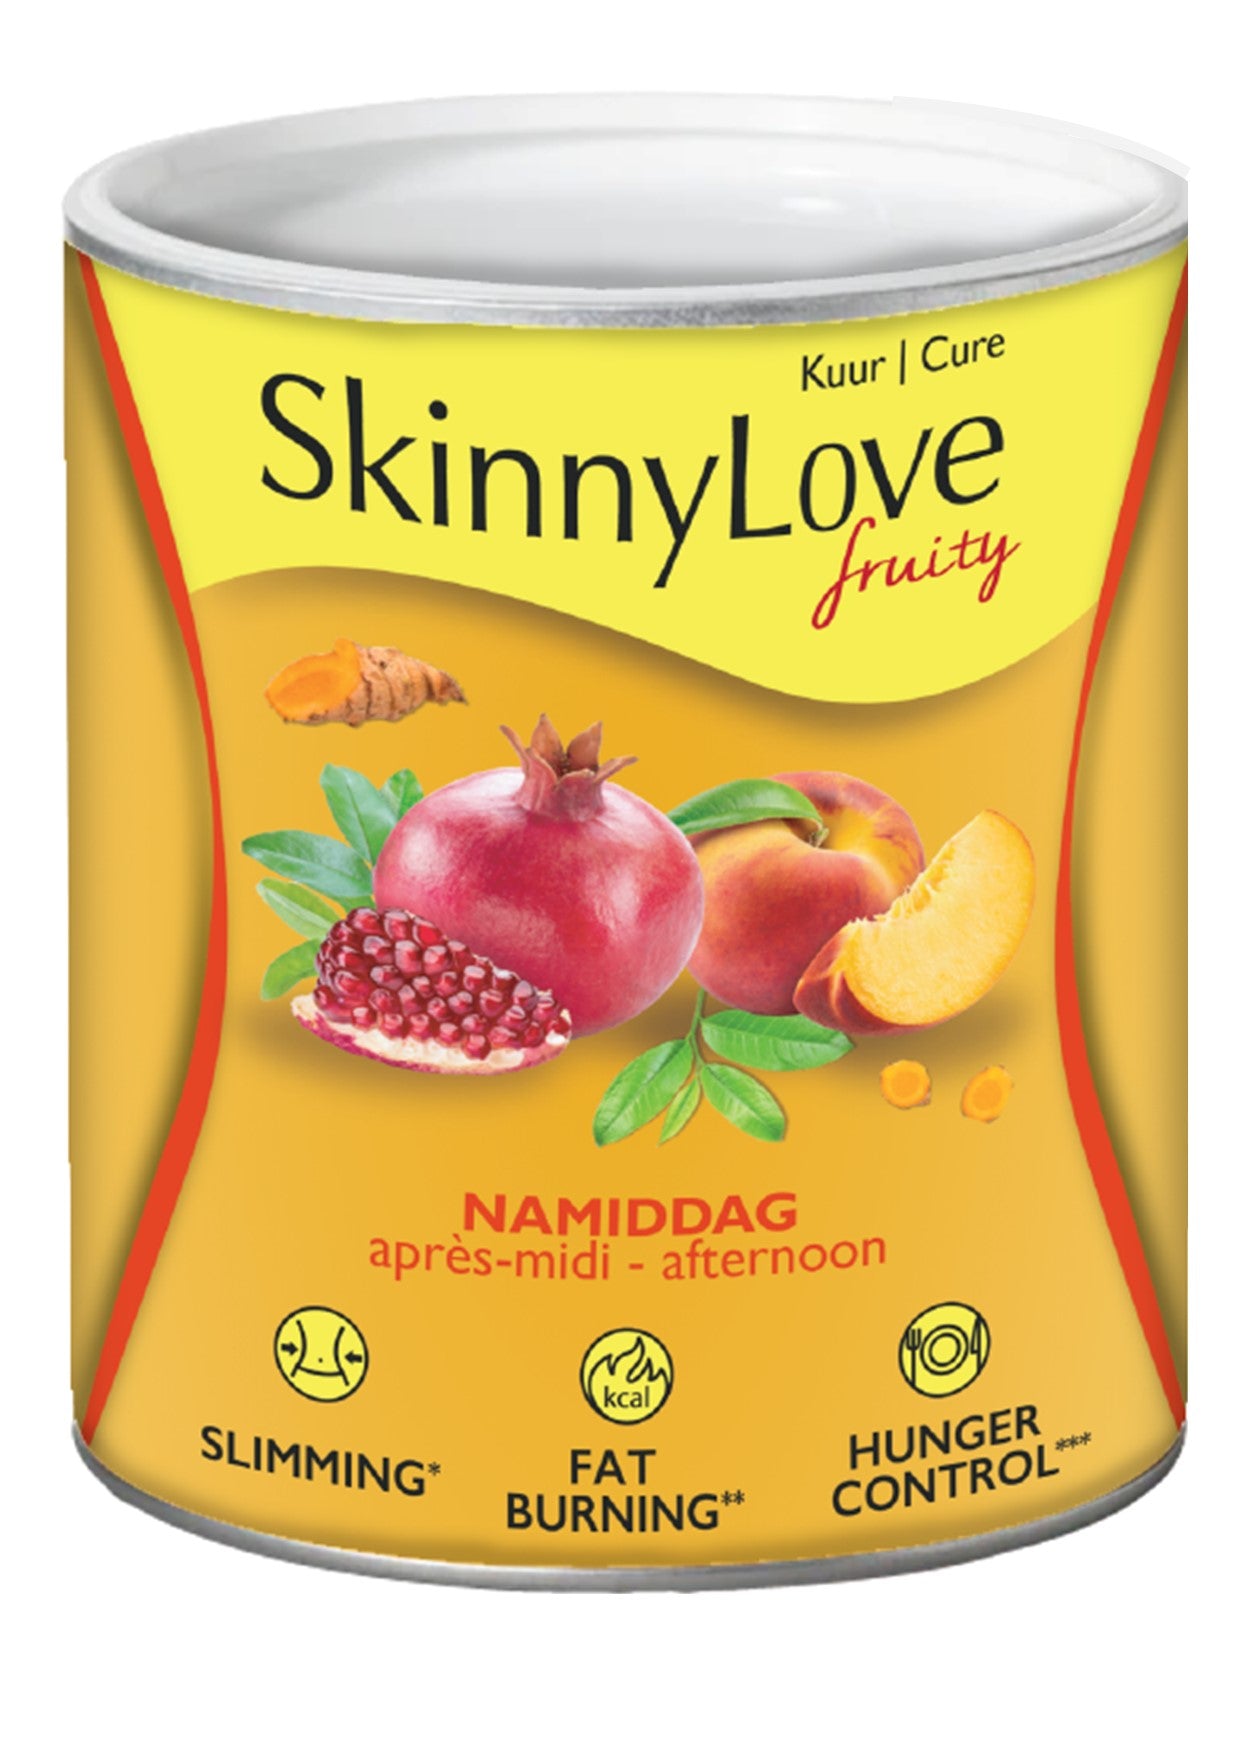 SkinnyLove Fruity vermageringskuur (2x 500g) incl. garantie